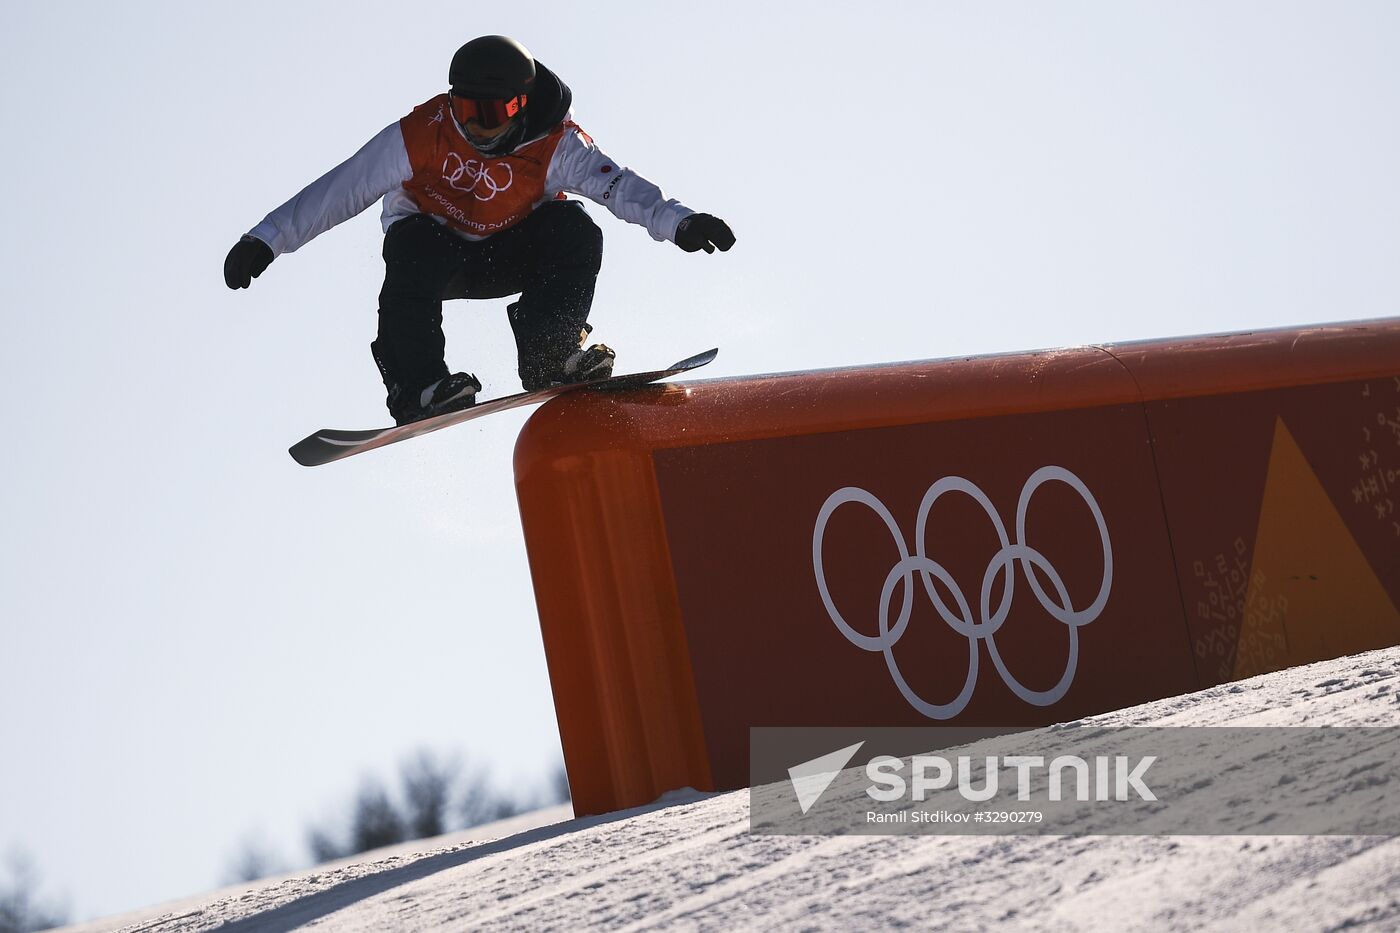 2018 Winter Olympics. Snowboarding. Slopestyle. Training sessions